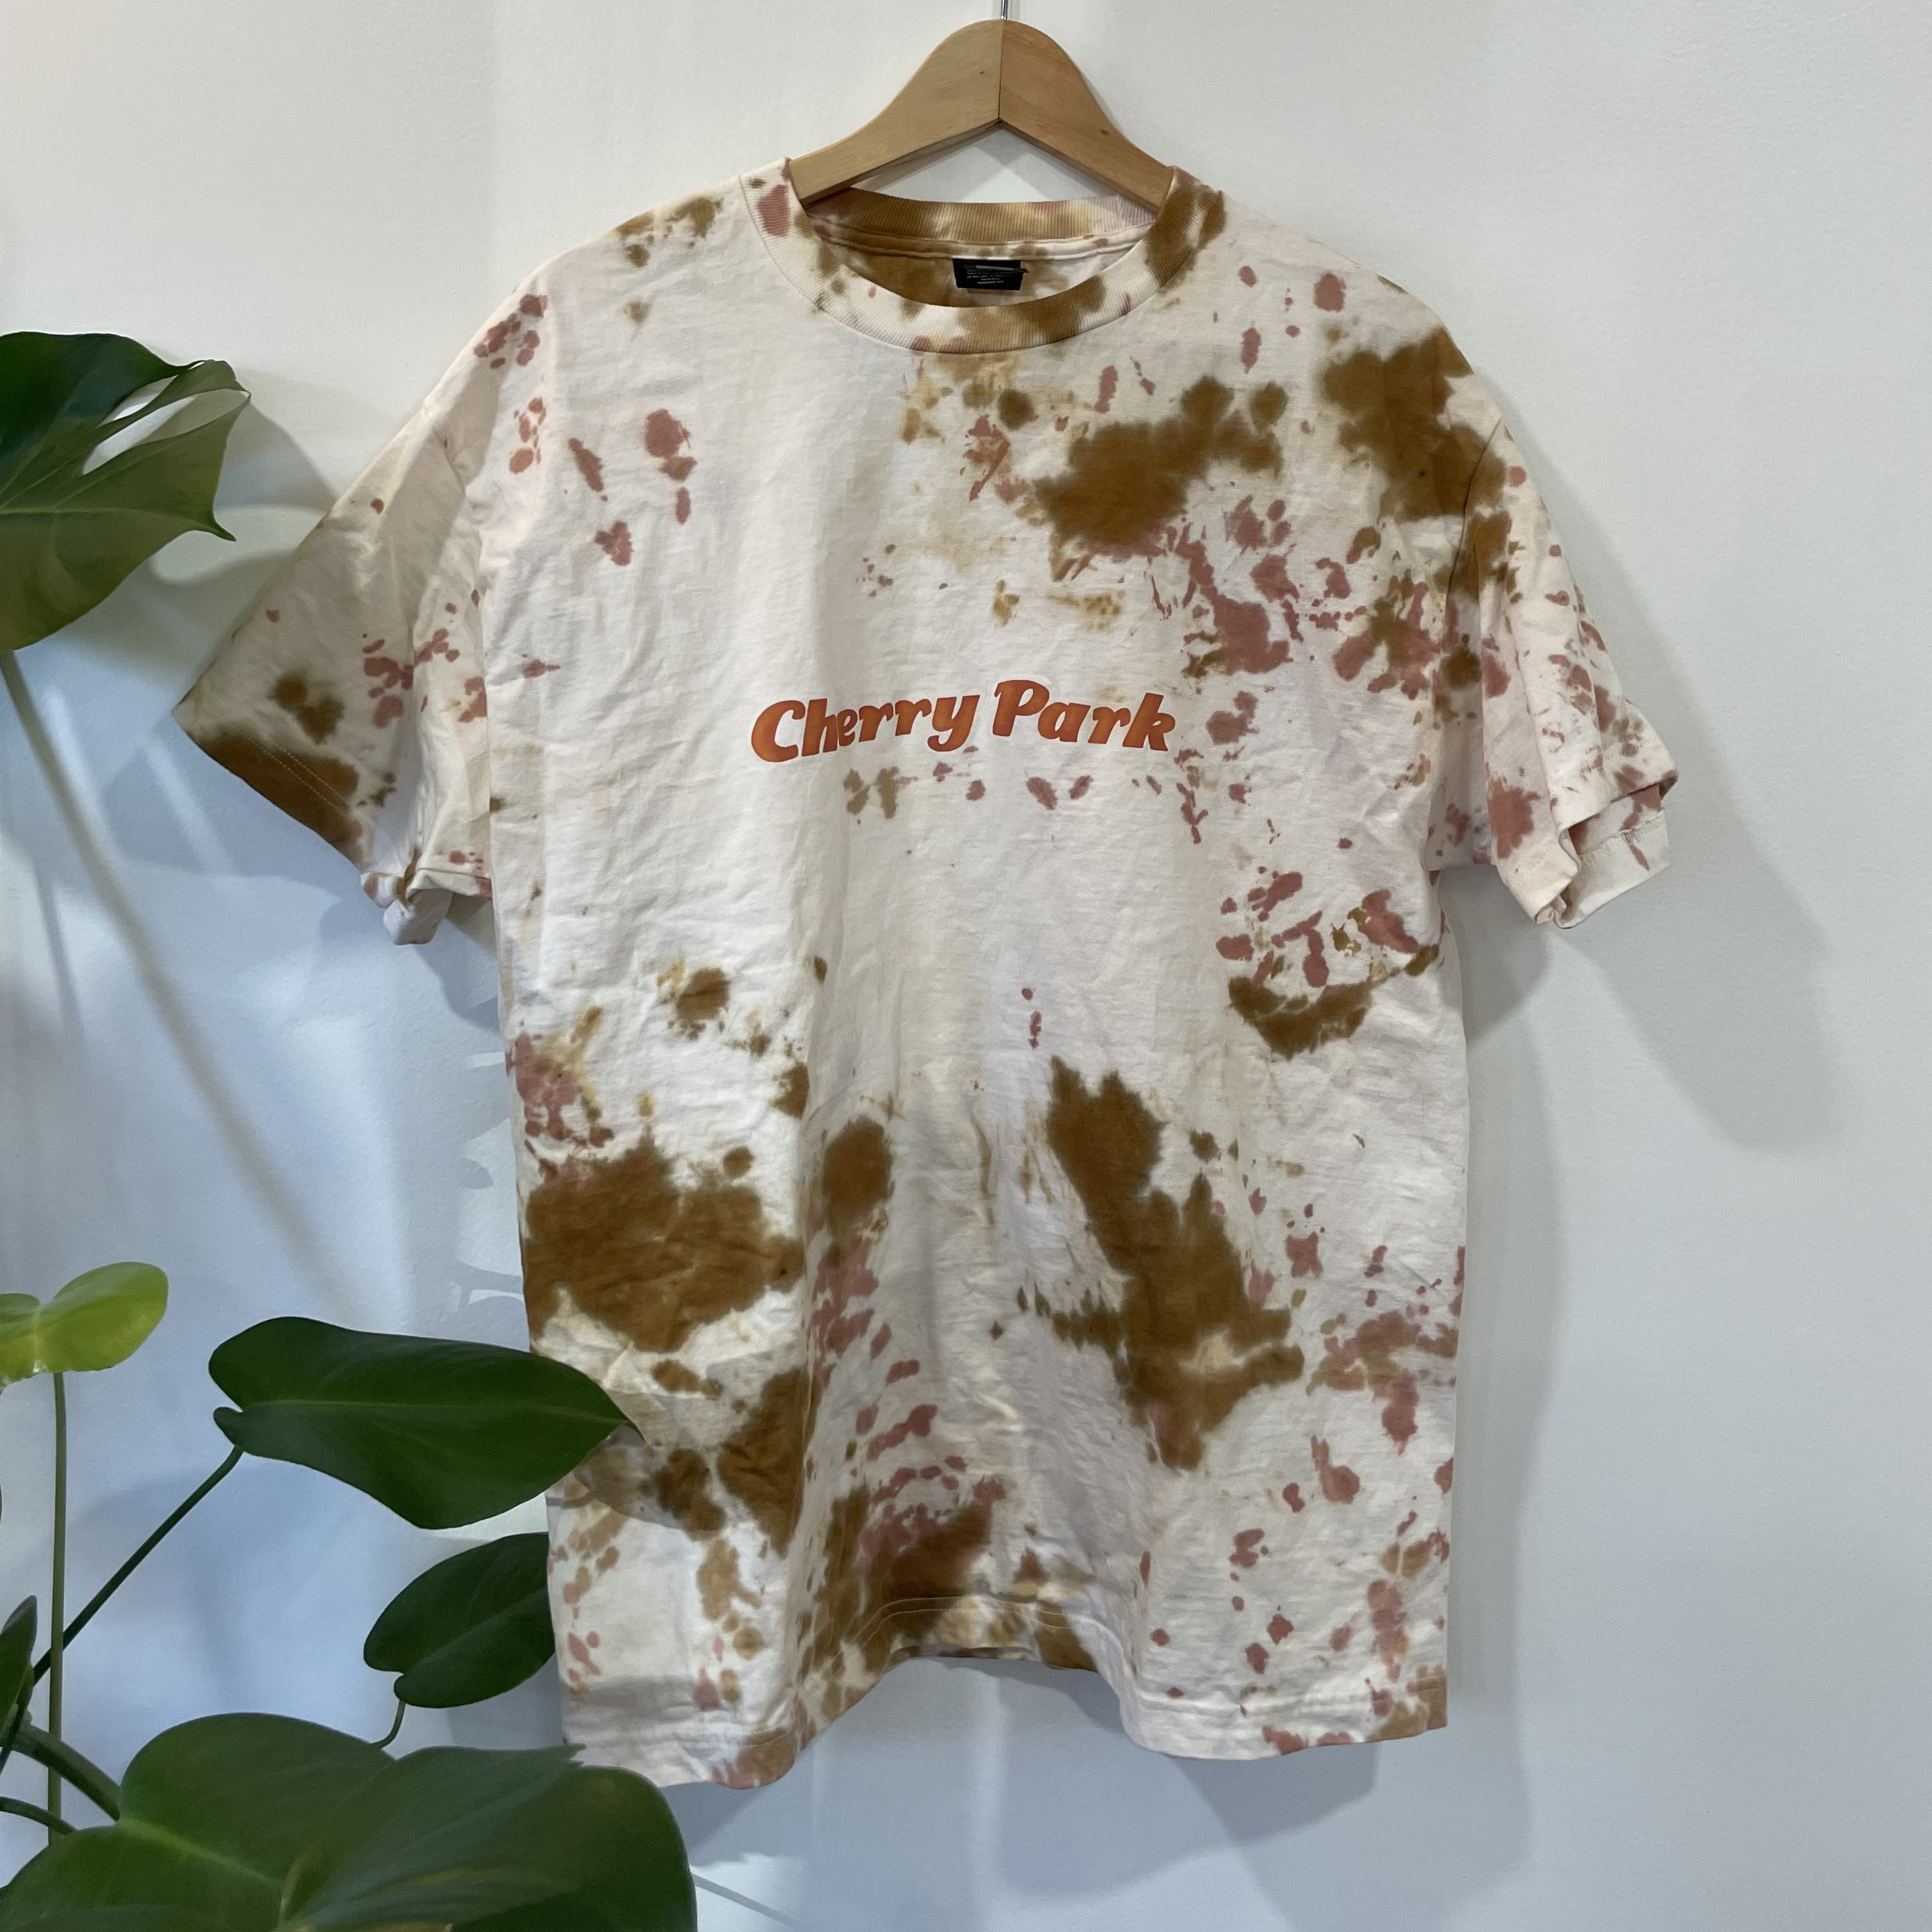 Cherry Park band's clothing merchandise style option: Tie-Dye Shirt